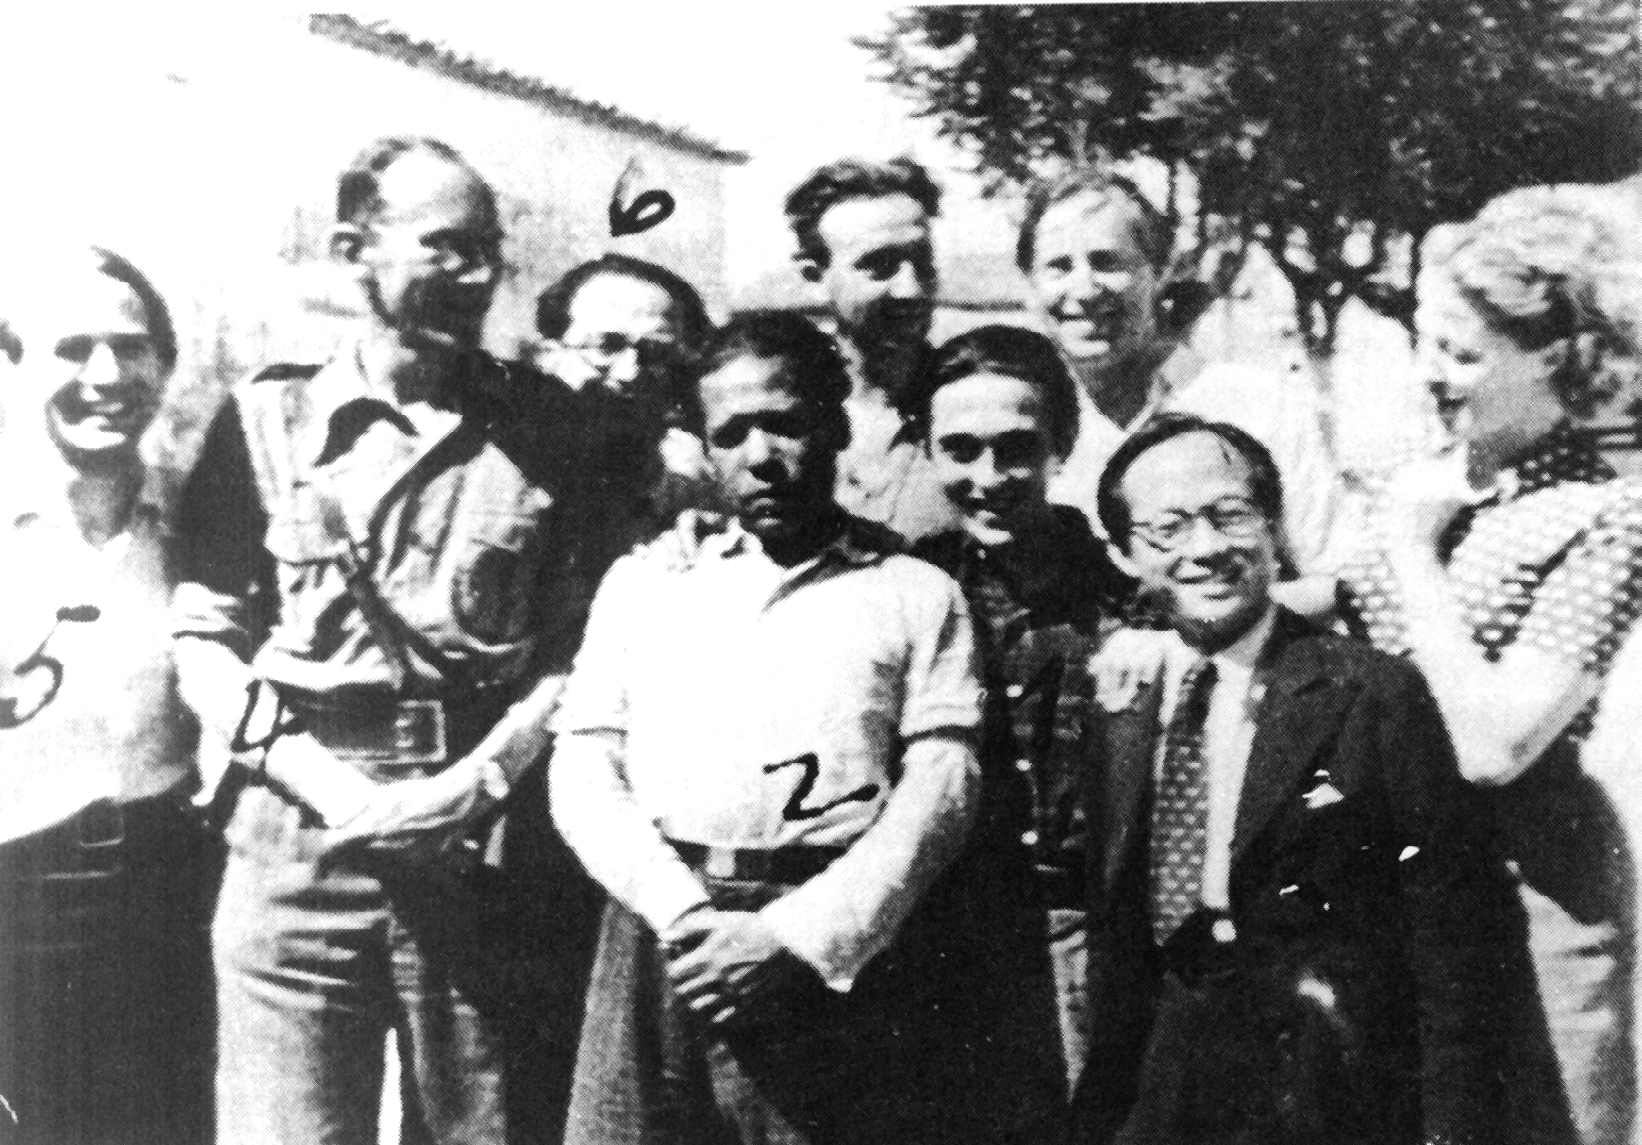 Forfatterkongressen i Madrid juli 1937.
1) Felix Pita Rodriguez 2) Nicholas Guillen 3)M.Se 4)Ludwig Renn 5)Walter Reuter 6) Max Aub